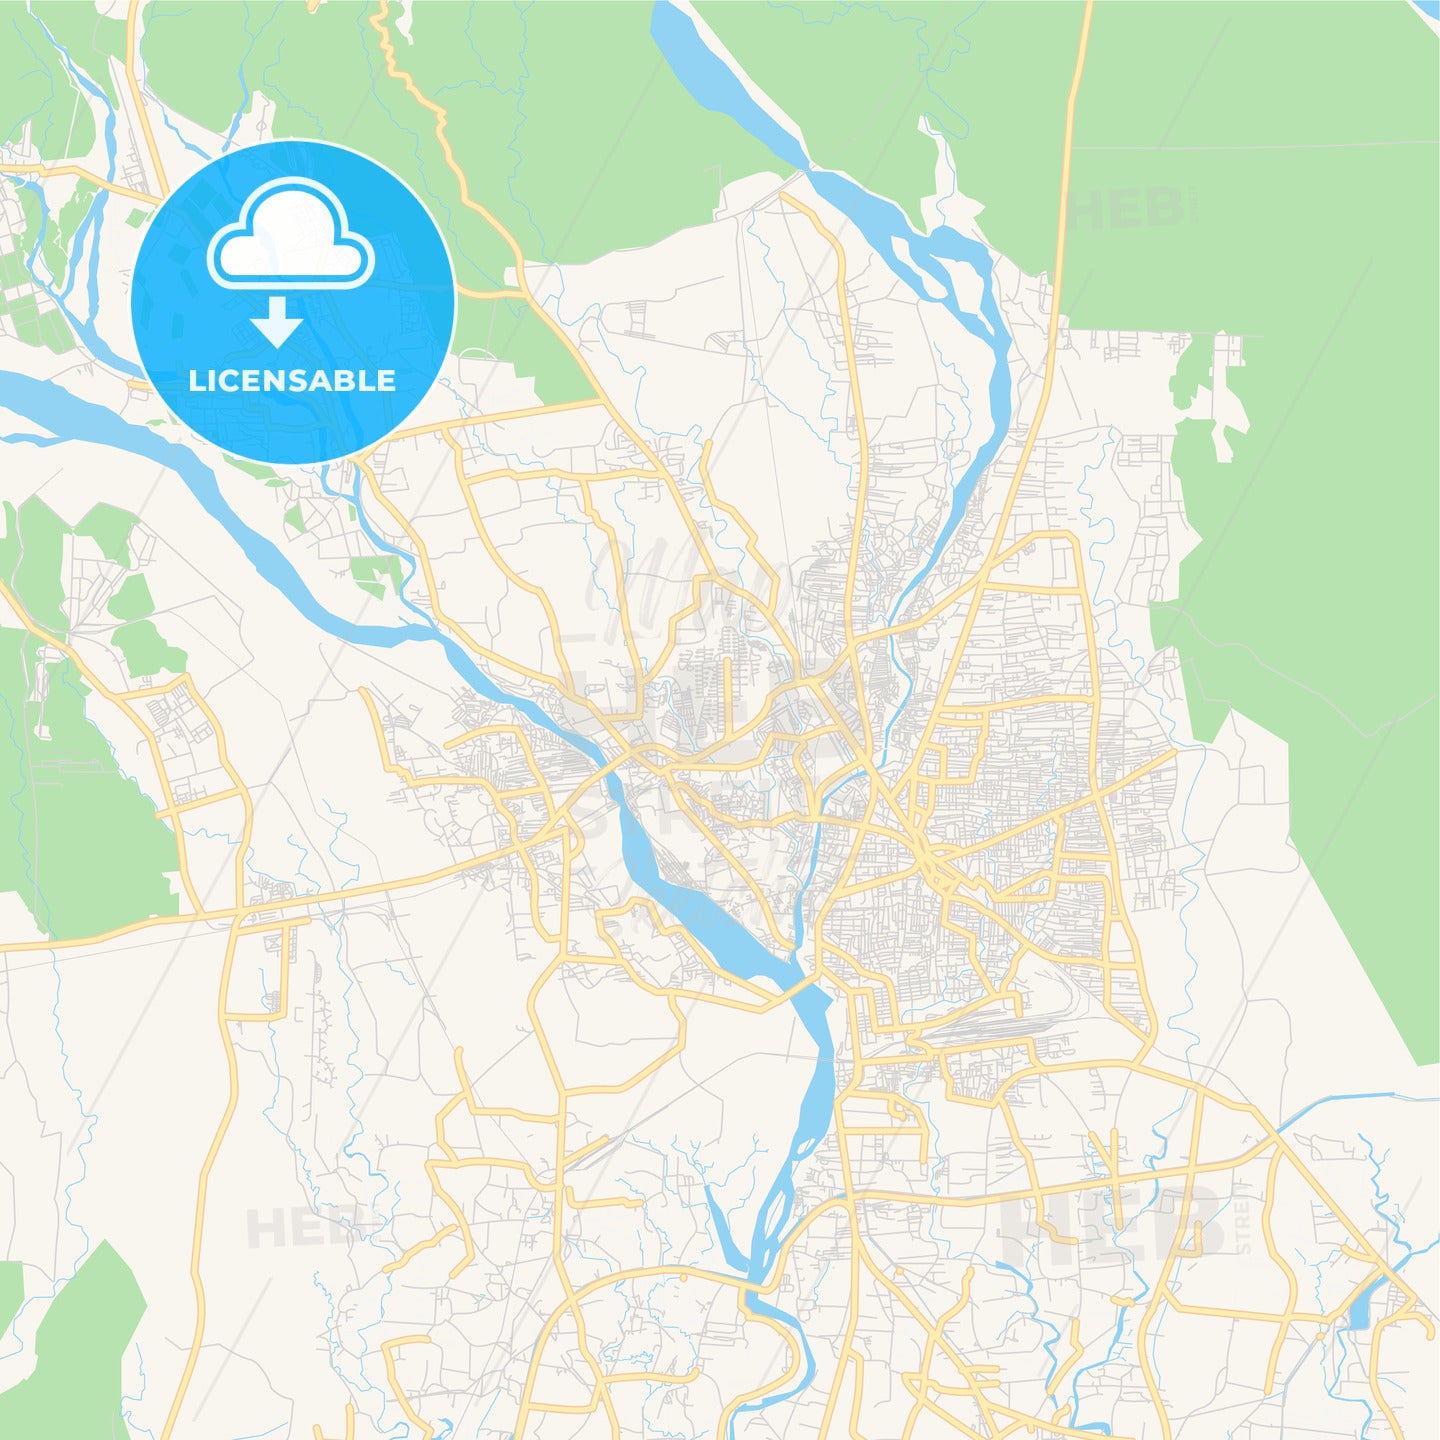 Printable street map of Siliguri, India